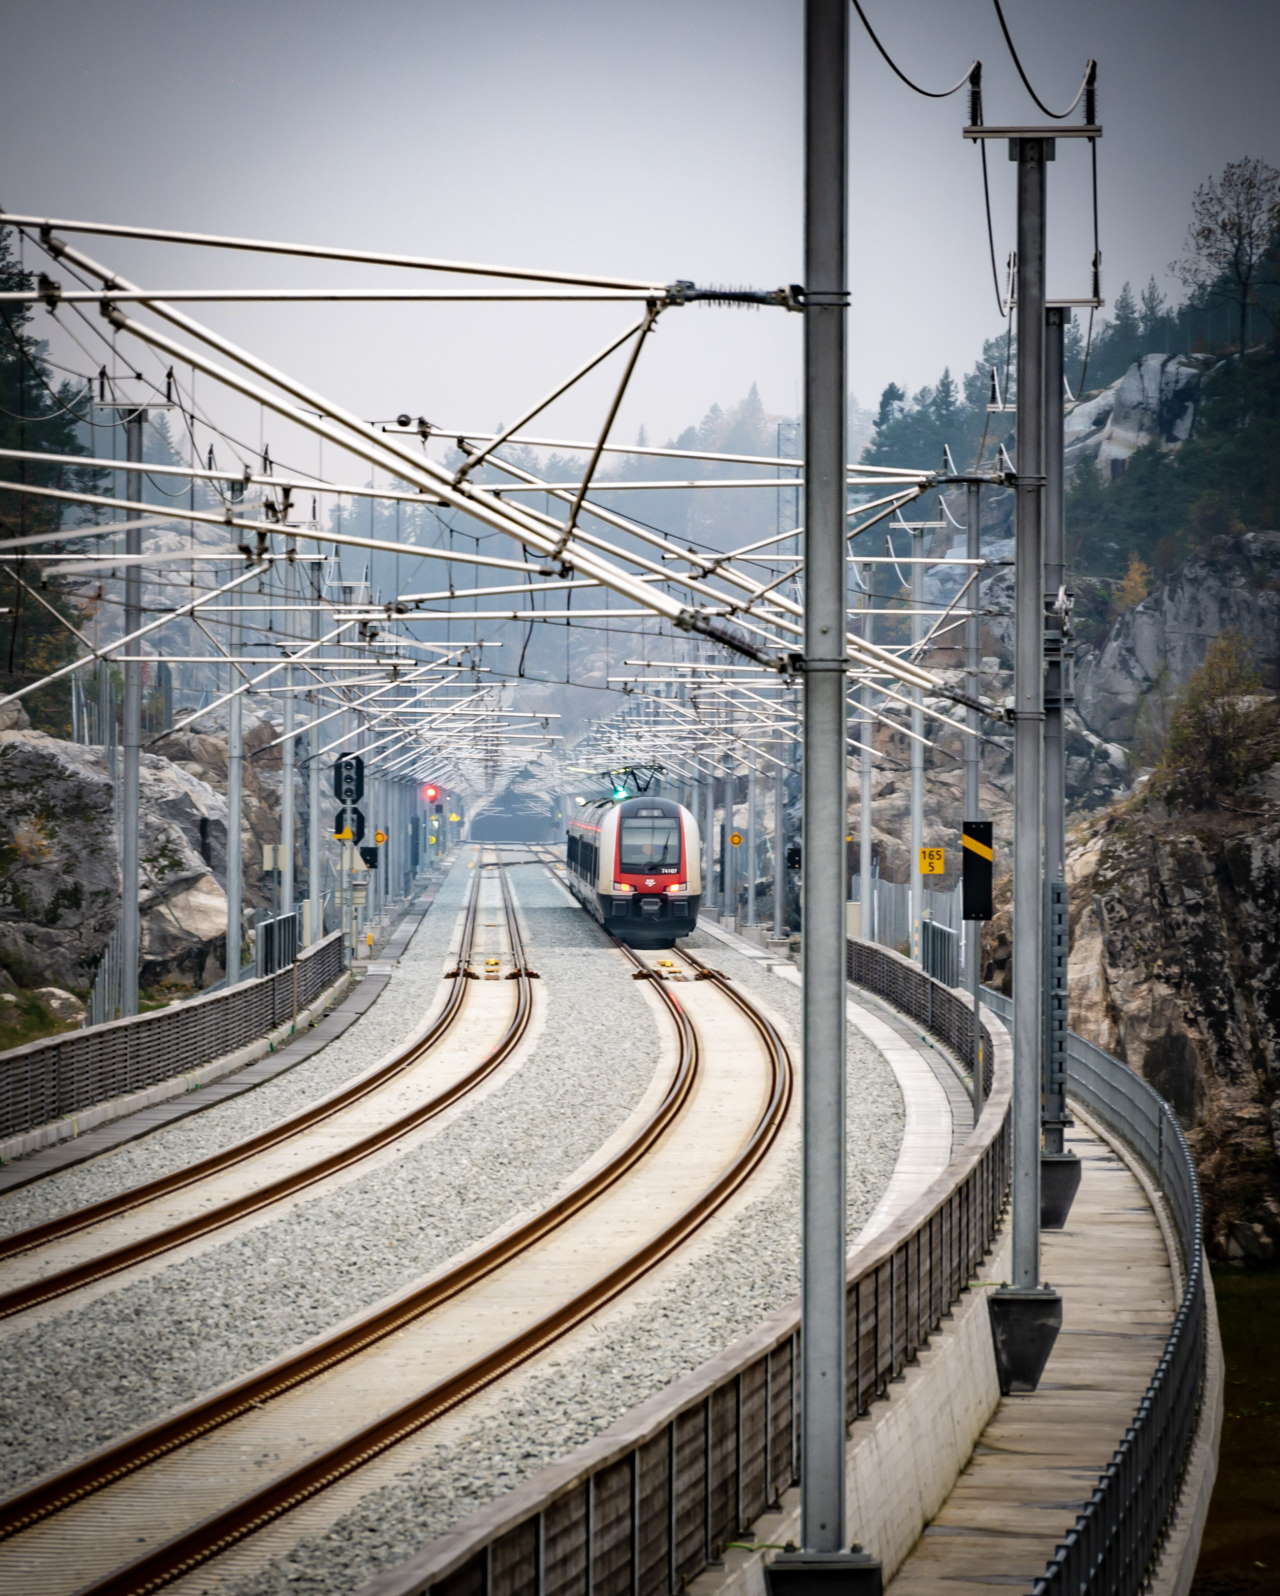 Comboios portugueses poupam eletricidade com tecnologia norueguesa